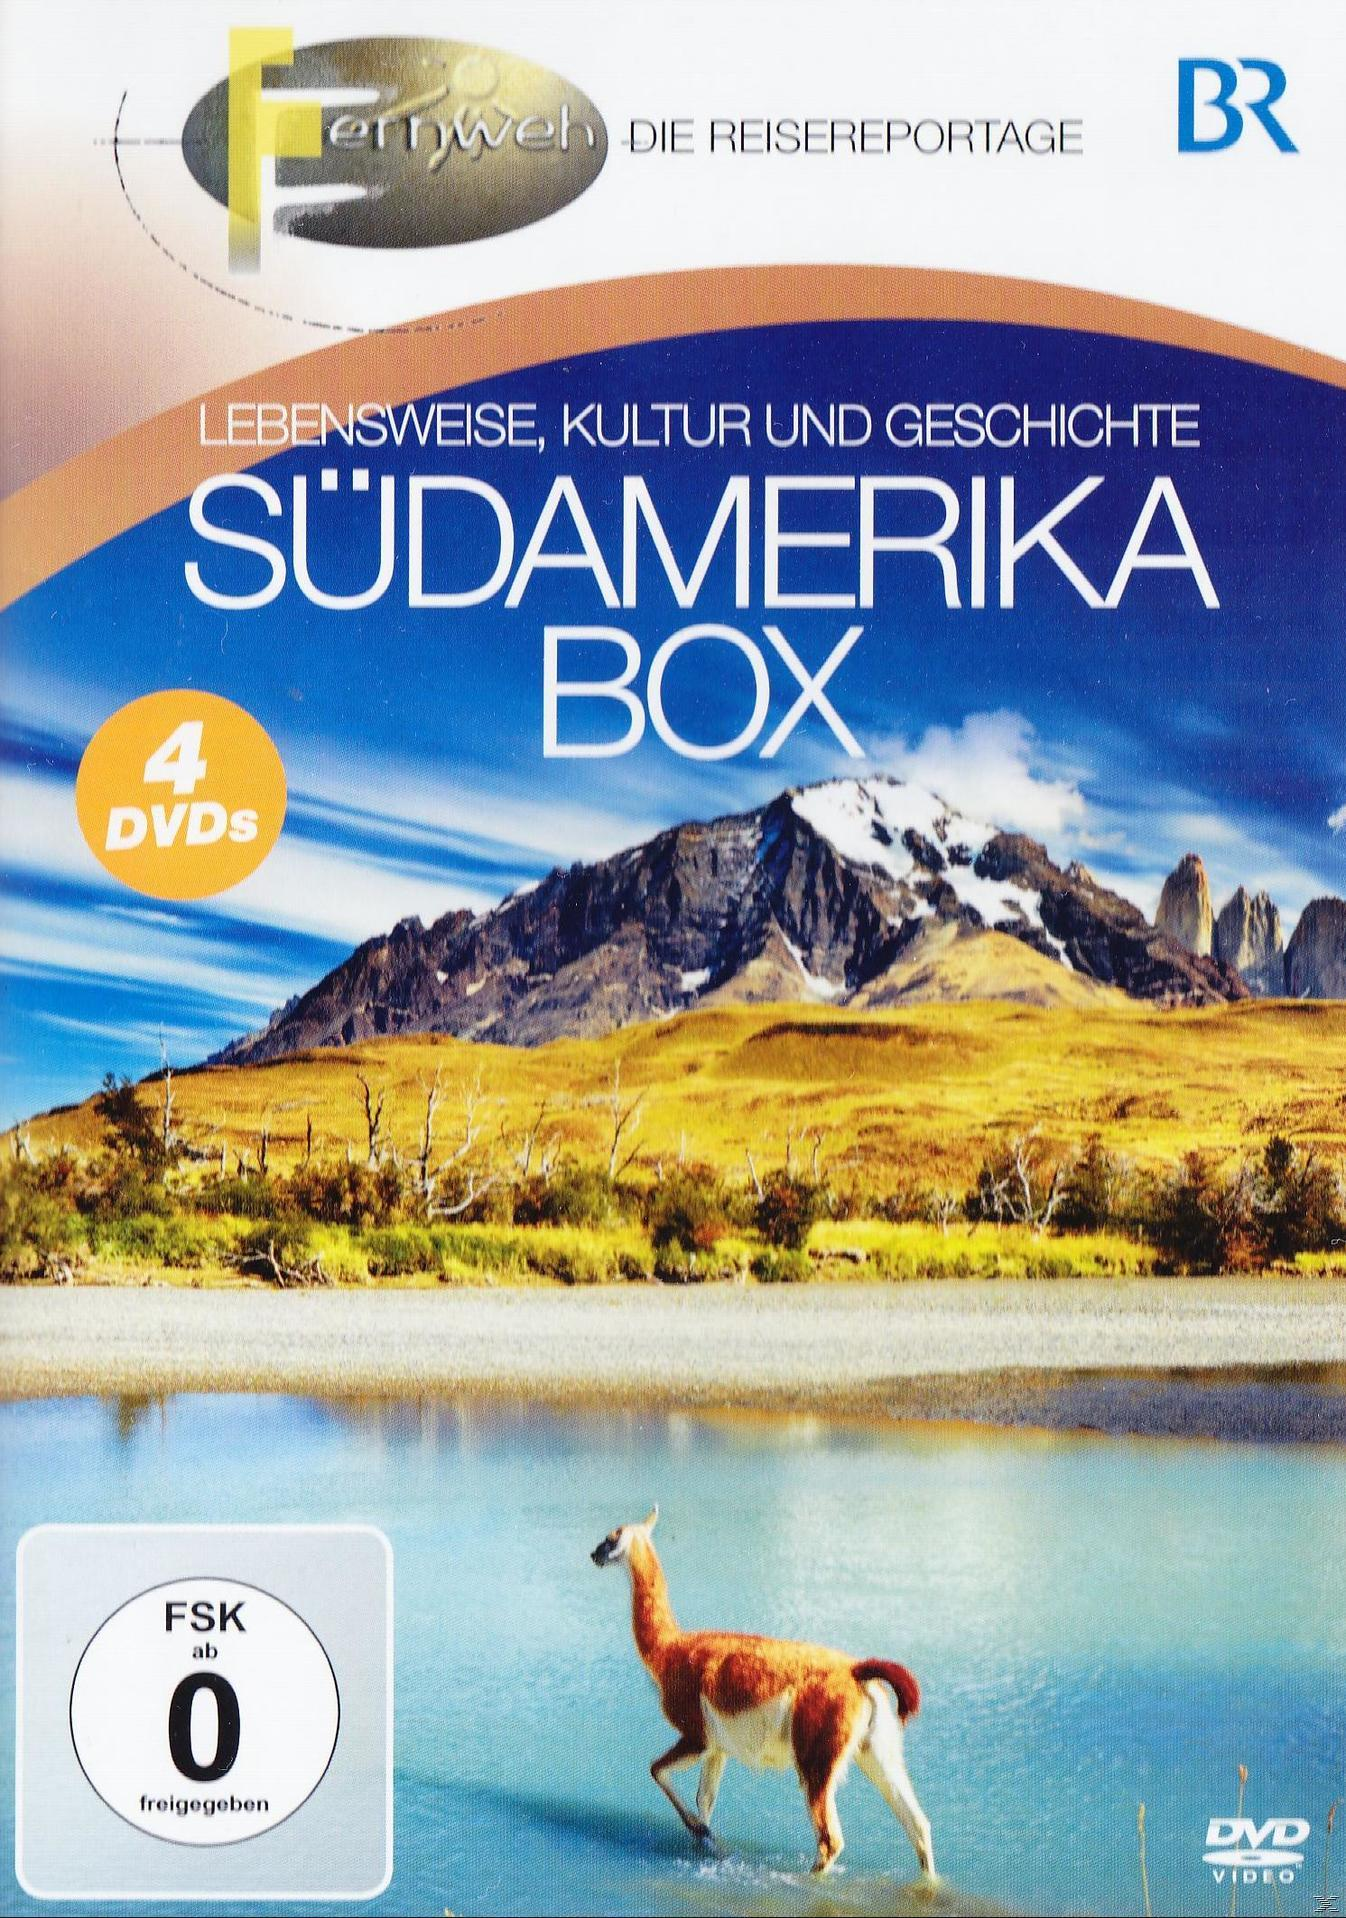 DVD Suedamerika Box